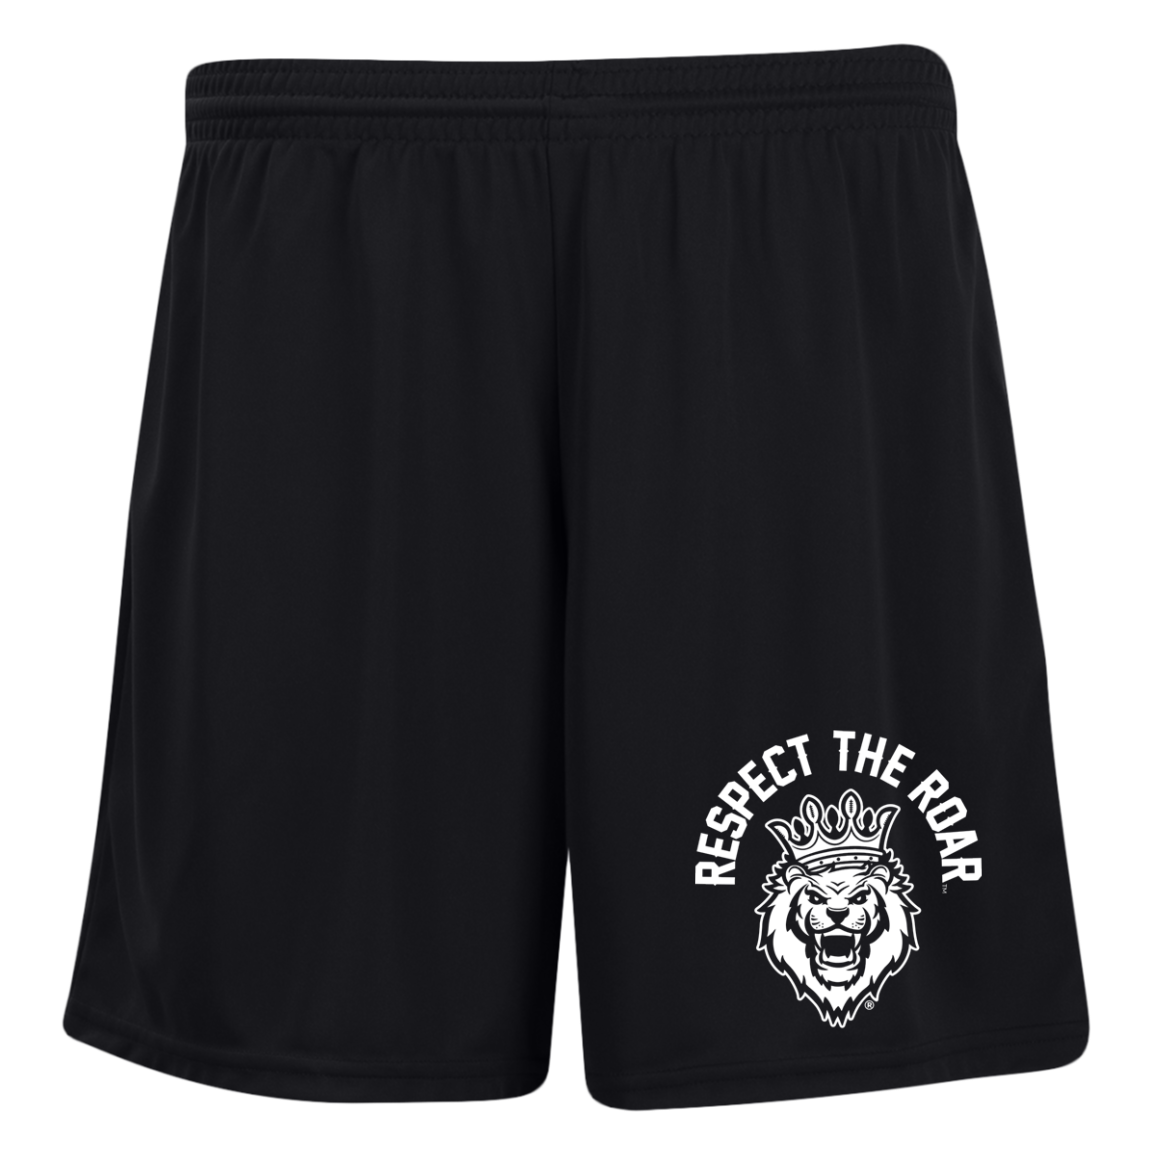 Respect The Roar® Ladies' 7 inch Inseam Training Shorts